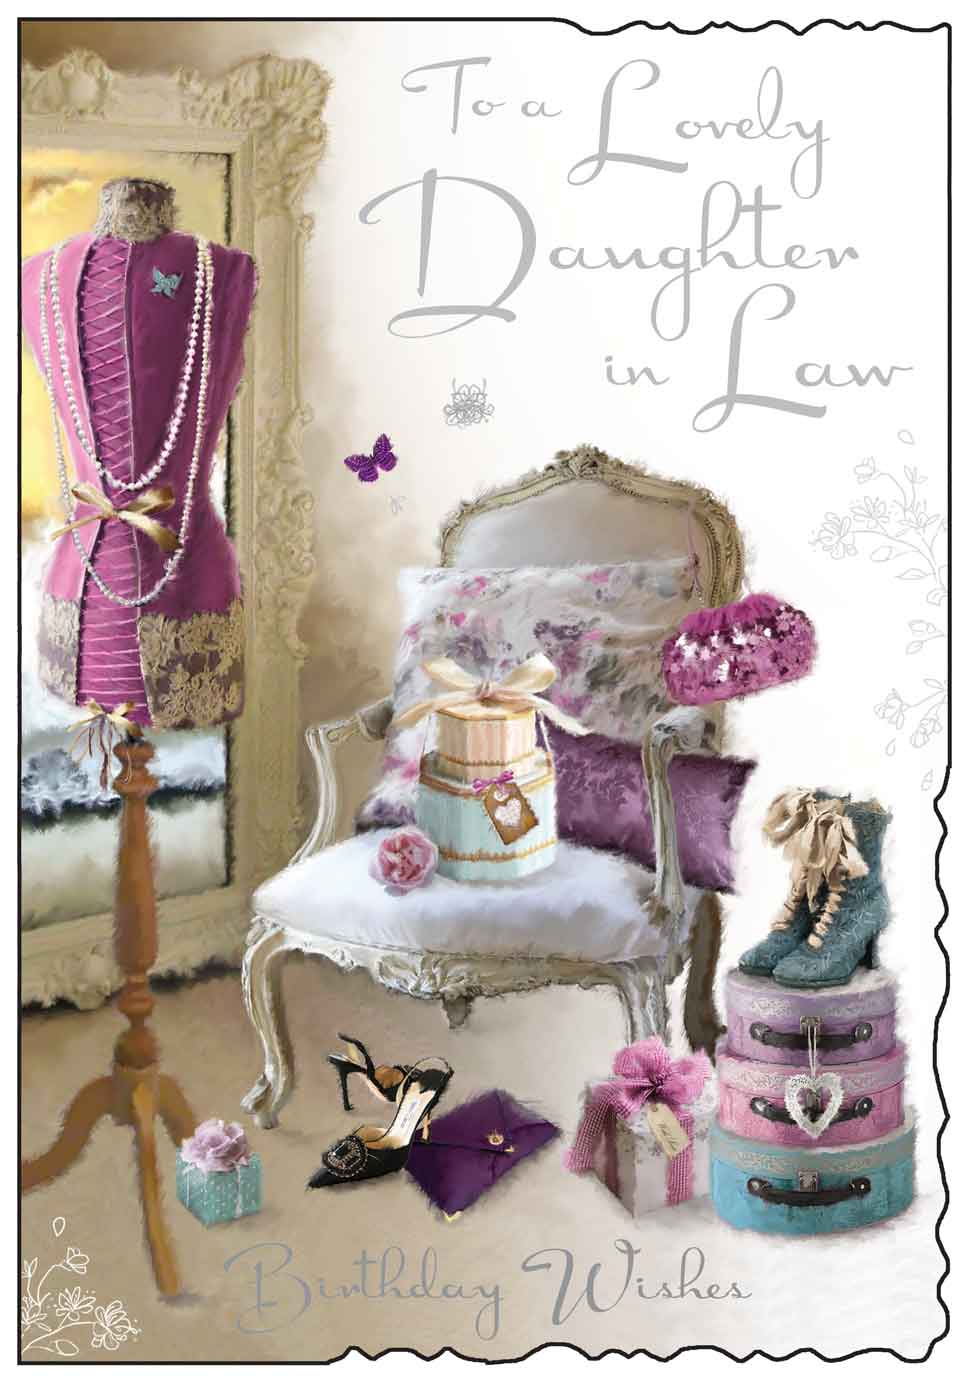 Daughter-in-Law Birthday Card - Elaborate Attire